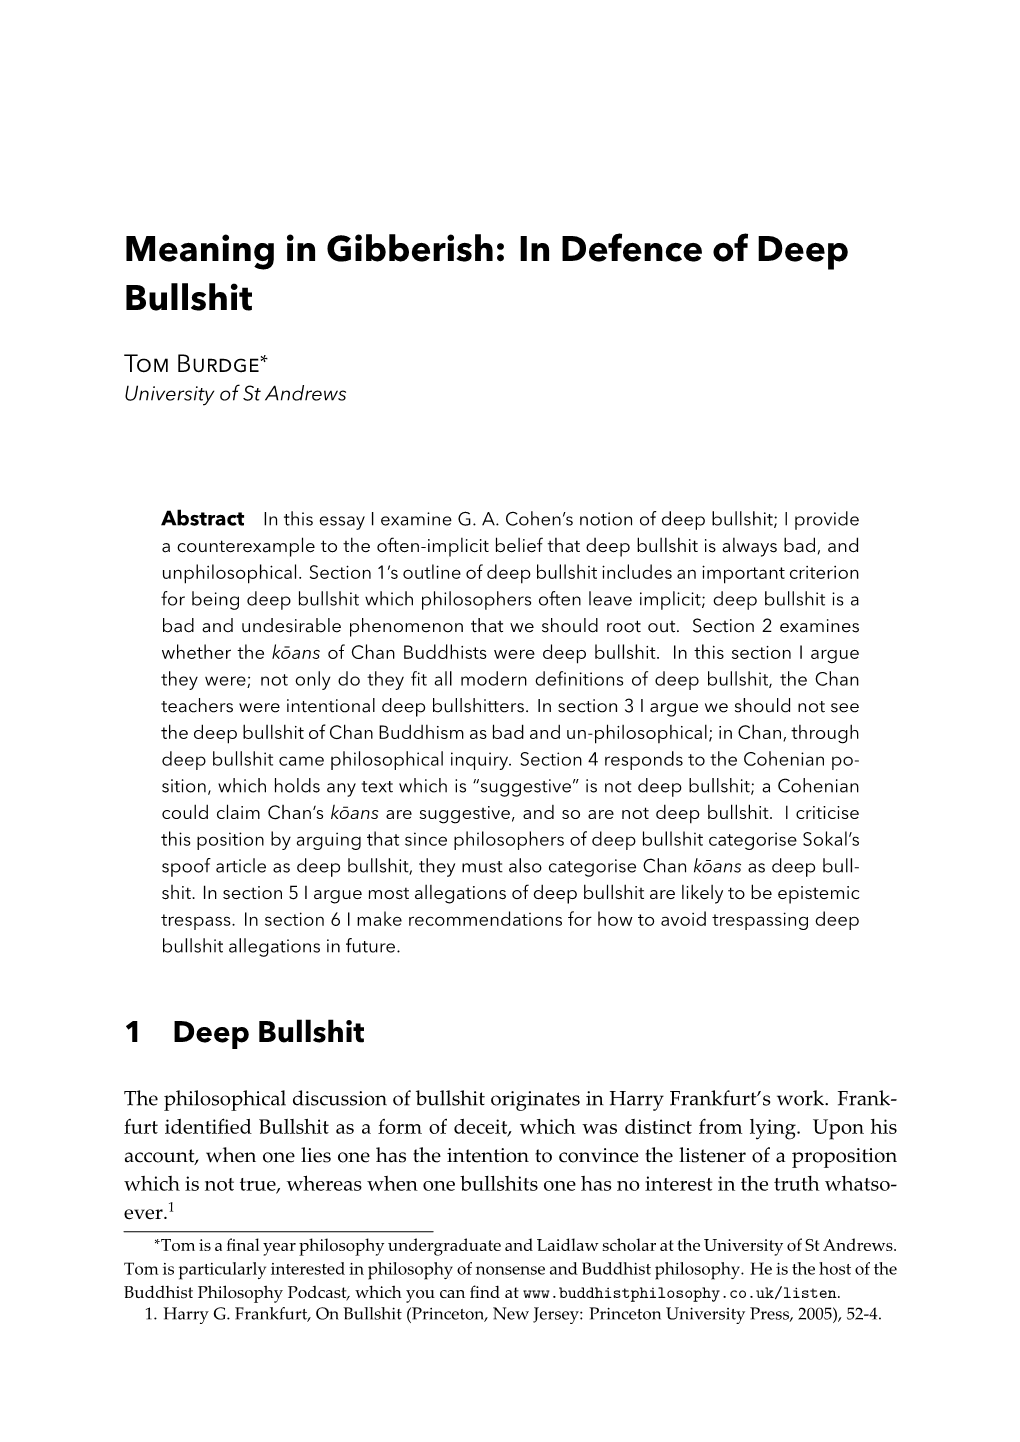 Meaning in Gibberish: in Defence of Deep Bullshit